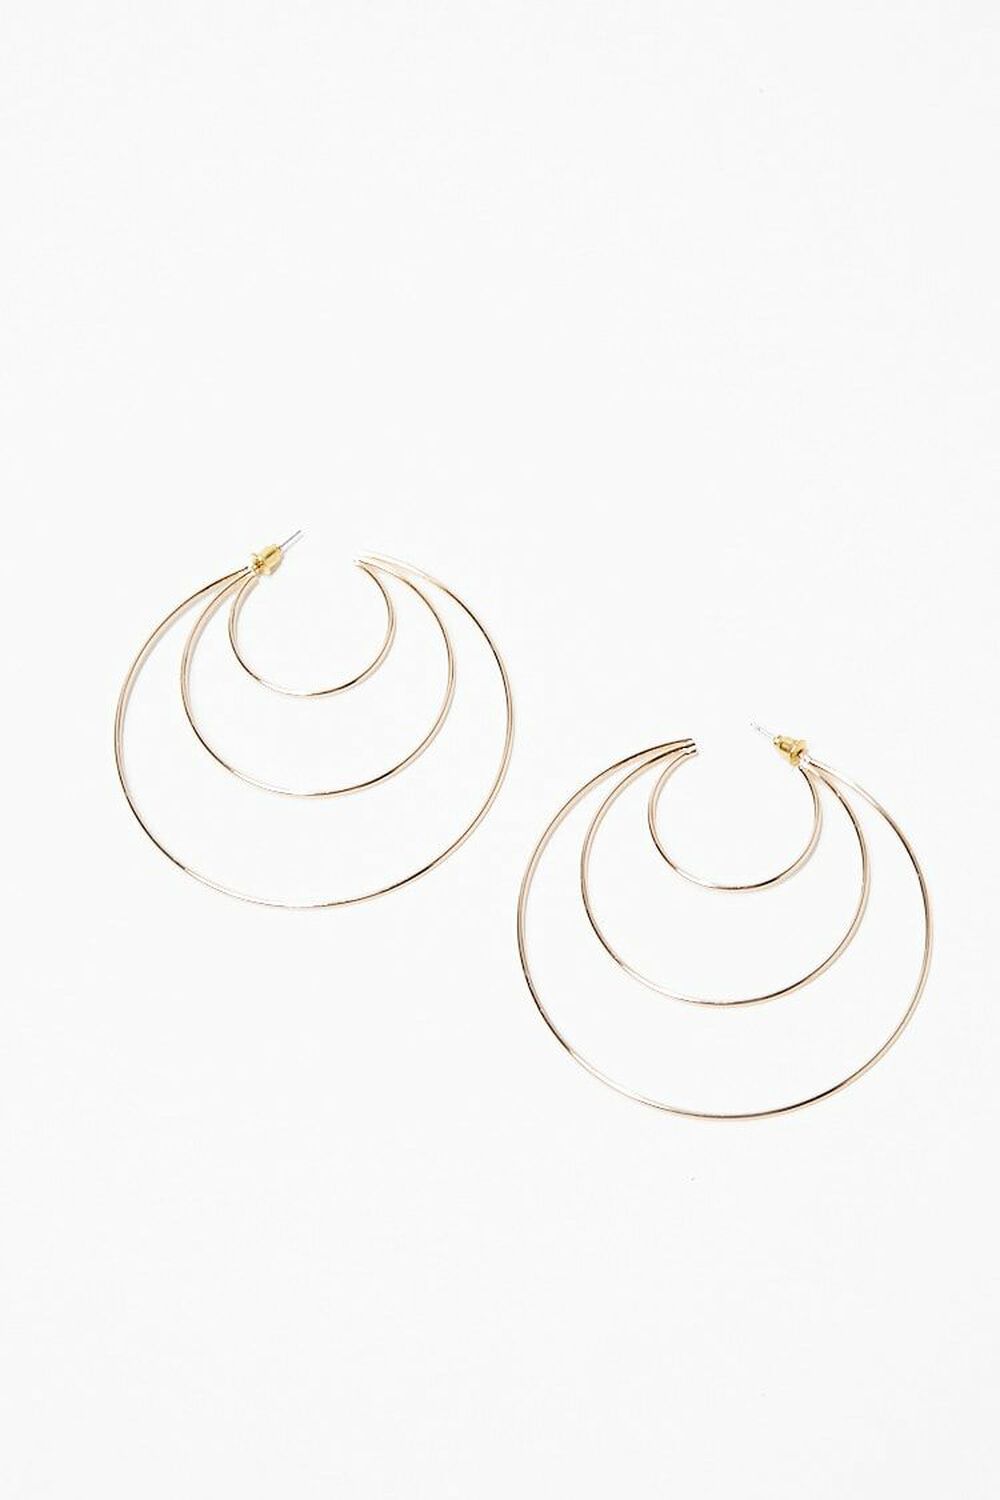 GOLD Crescent Cutout Hoop Earrings, image 1